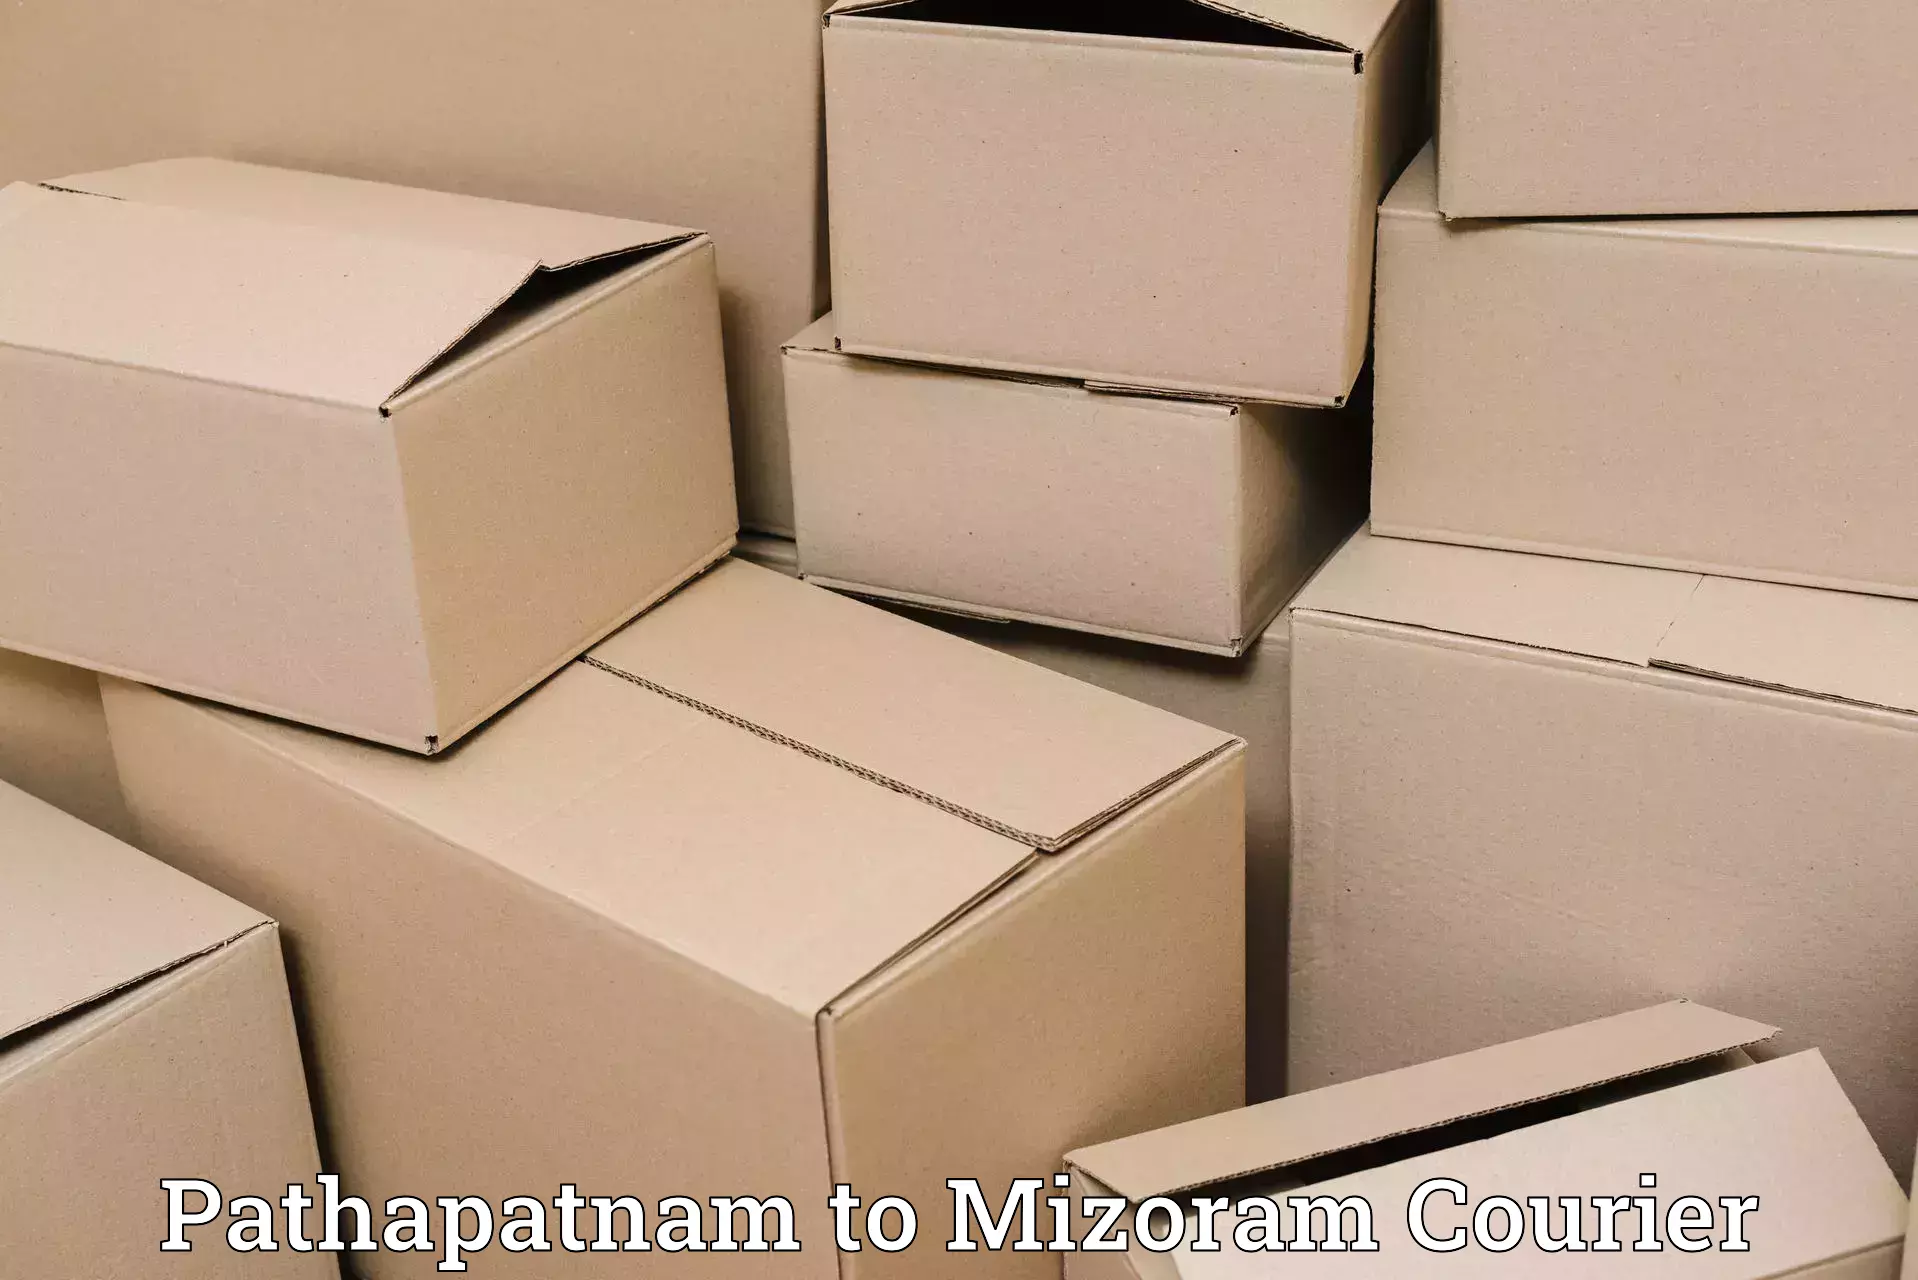 Seamless shipping experience Pathapatnam to Mizoram